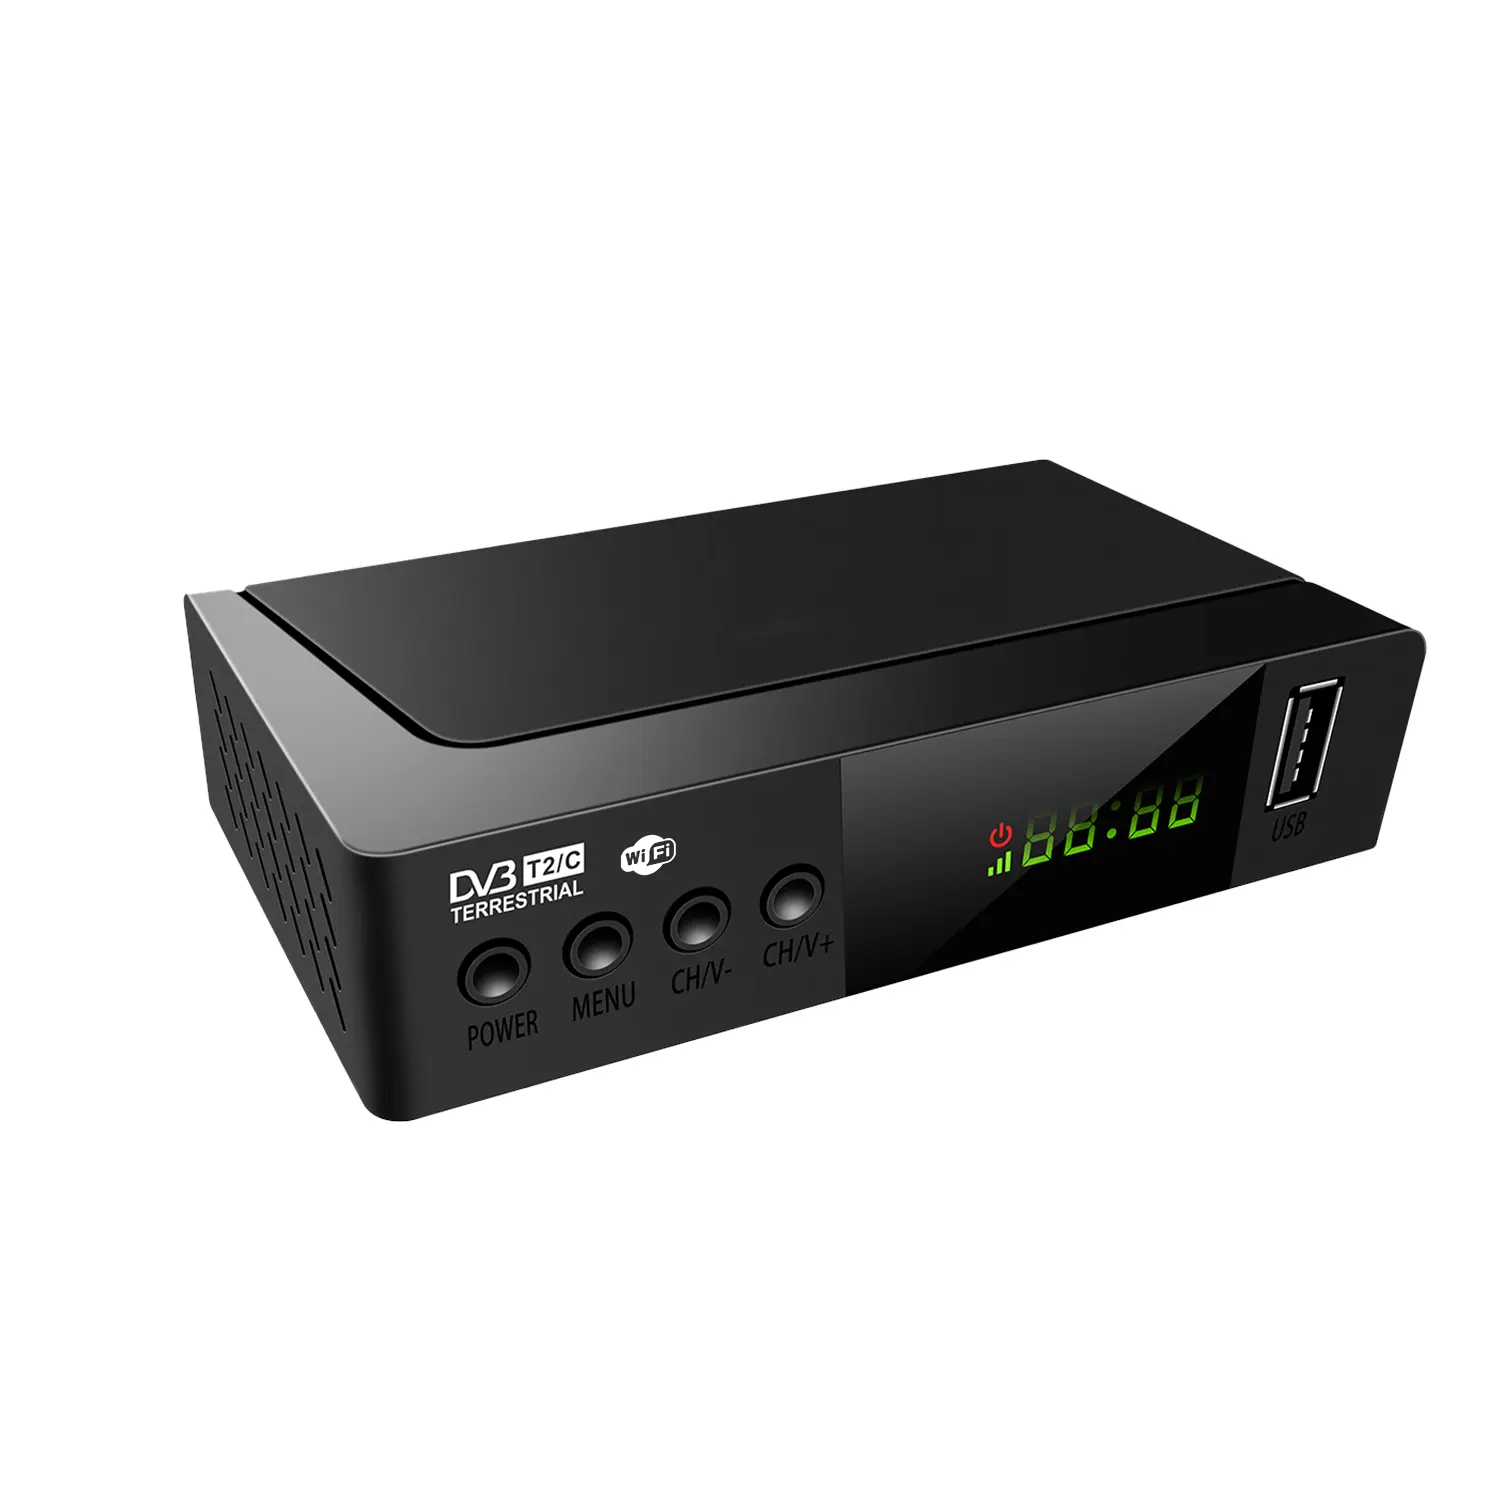 Dvb-t2 Tv Box Suppliers Network Set-top Box Full HD Digital Tv Receiver H.264 MPEG4/Hevc H.265 DVB-T2 Receiver